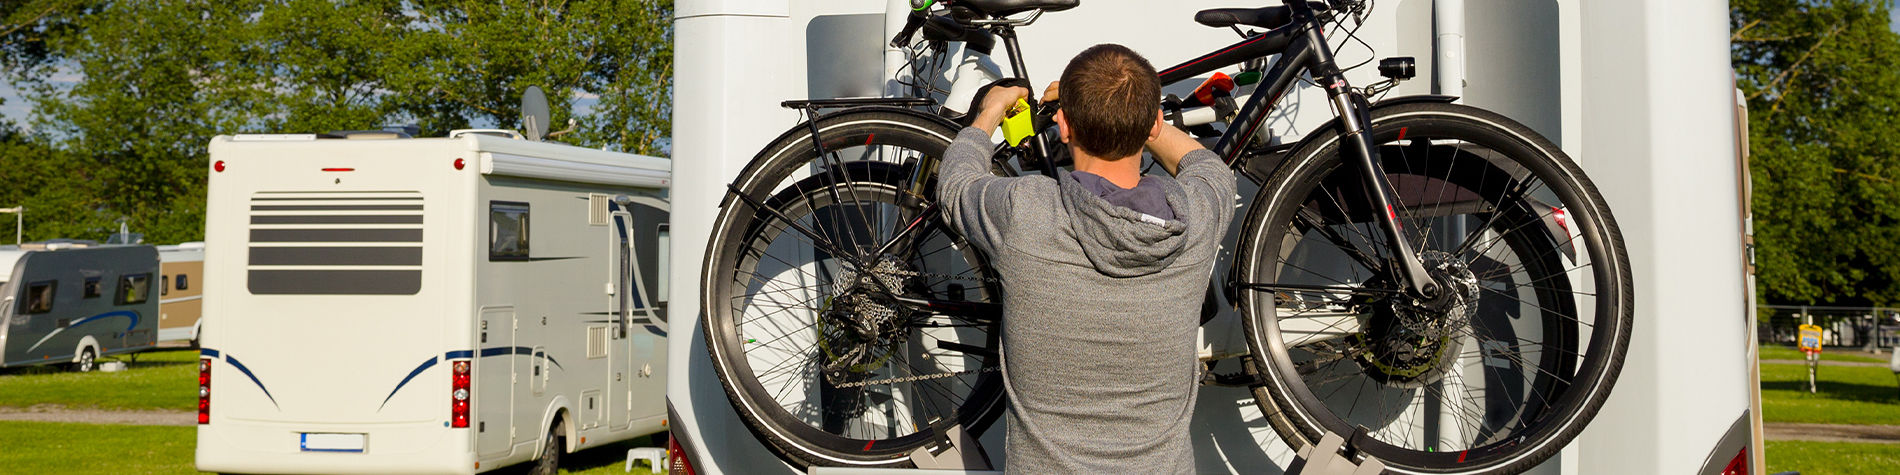 E-Bike & Fahrradträger für Wohnmobile